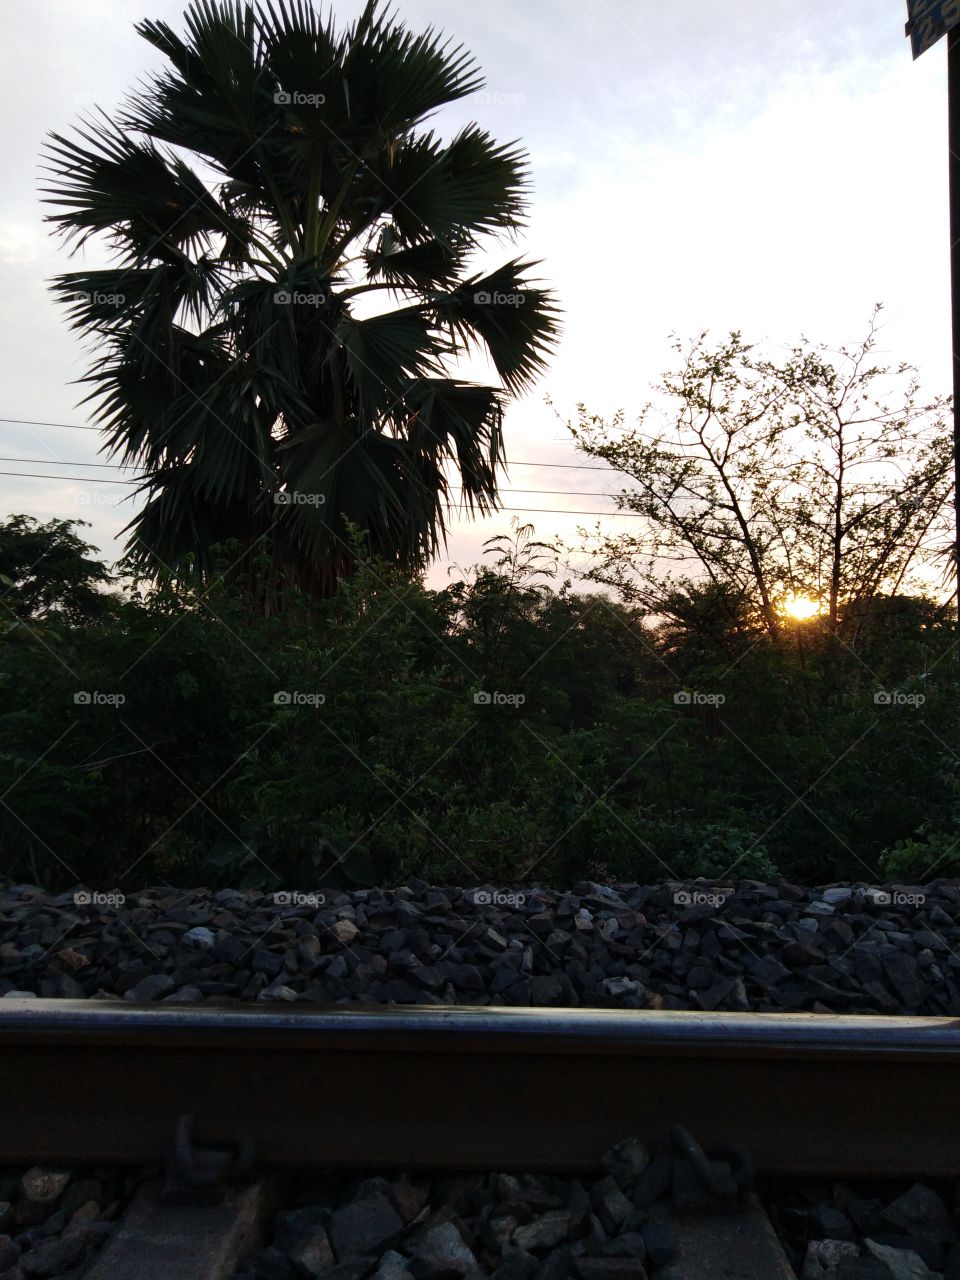 It's sunshine

Its beauty
It is  A good railway track